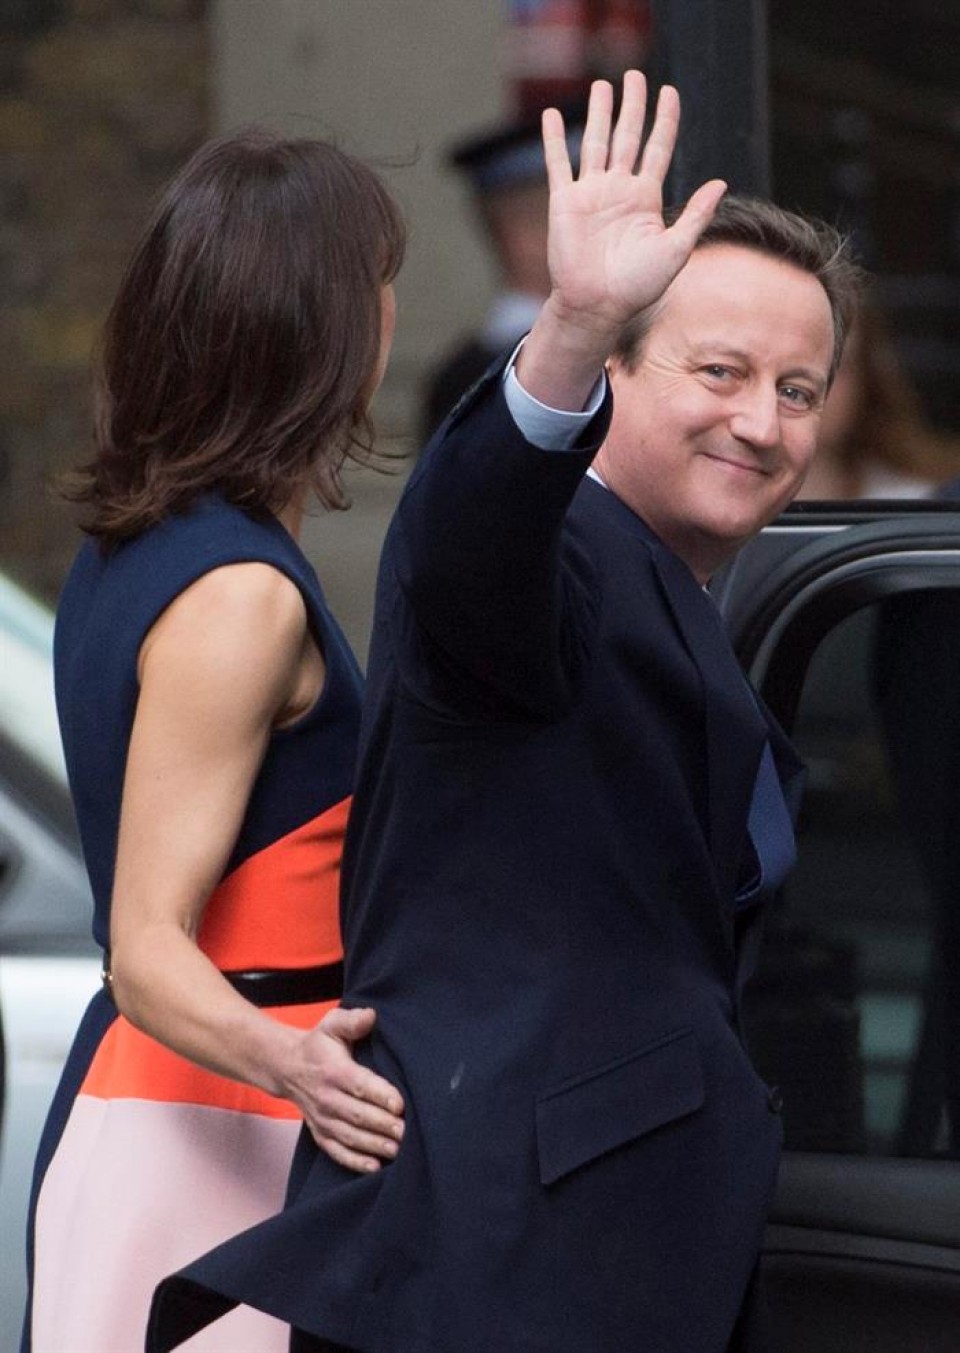 David Cameron Britainia Handiko lehen ministro ohia.